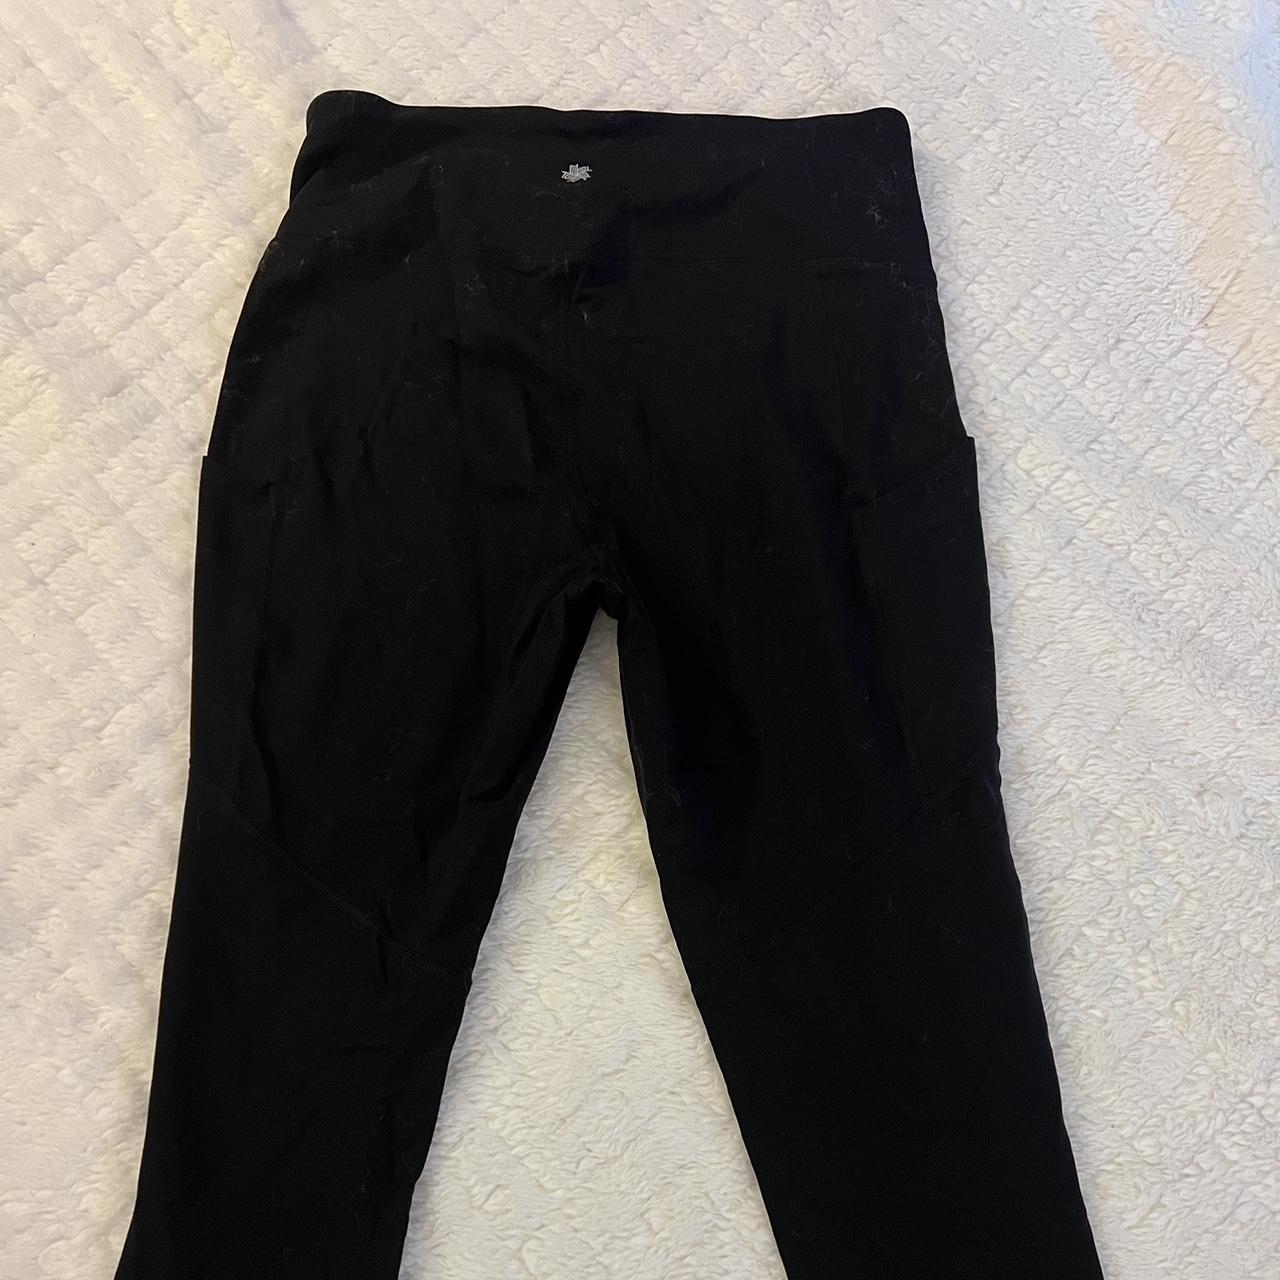 Black tek gear leggings with pockets - Depop